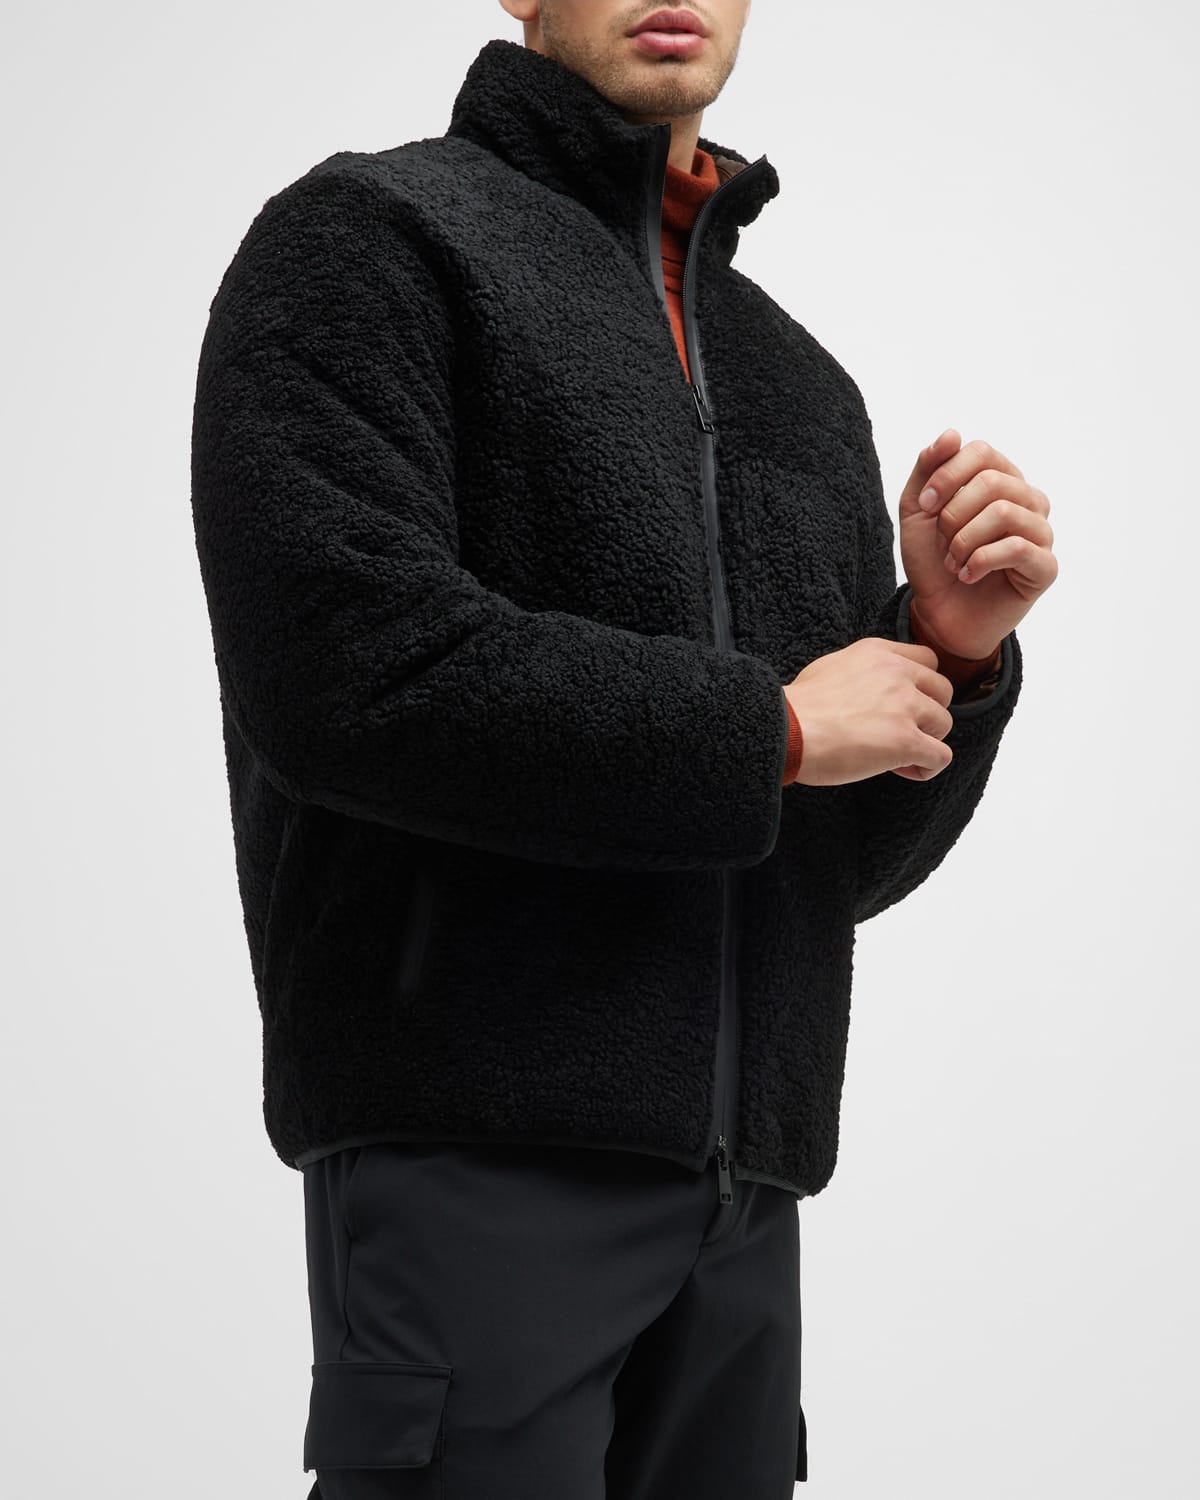 ZEGNA Men's Shearling Fur Blouson Jacket